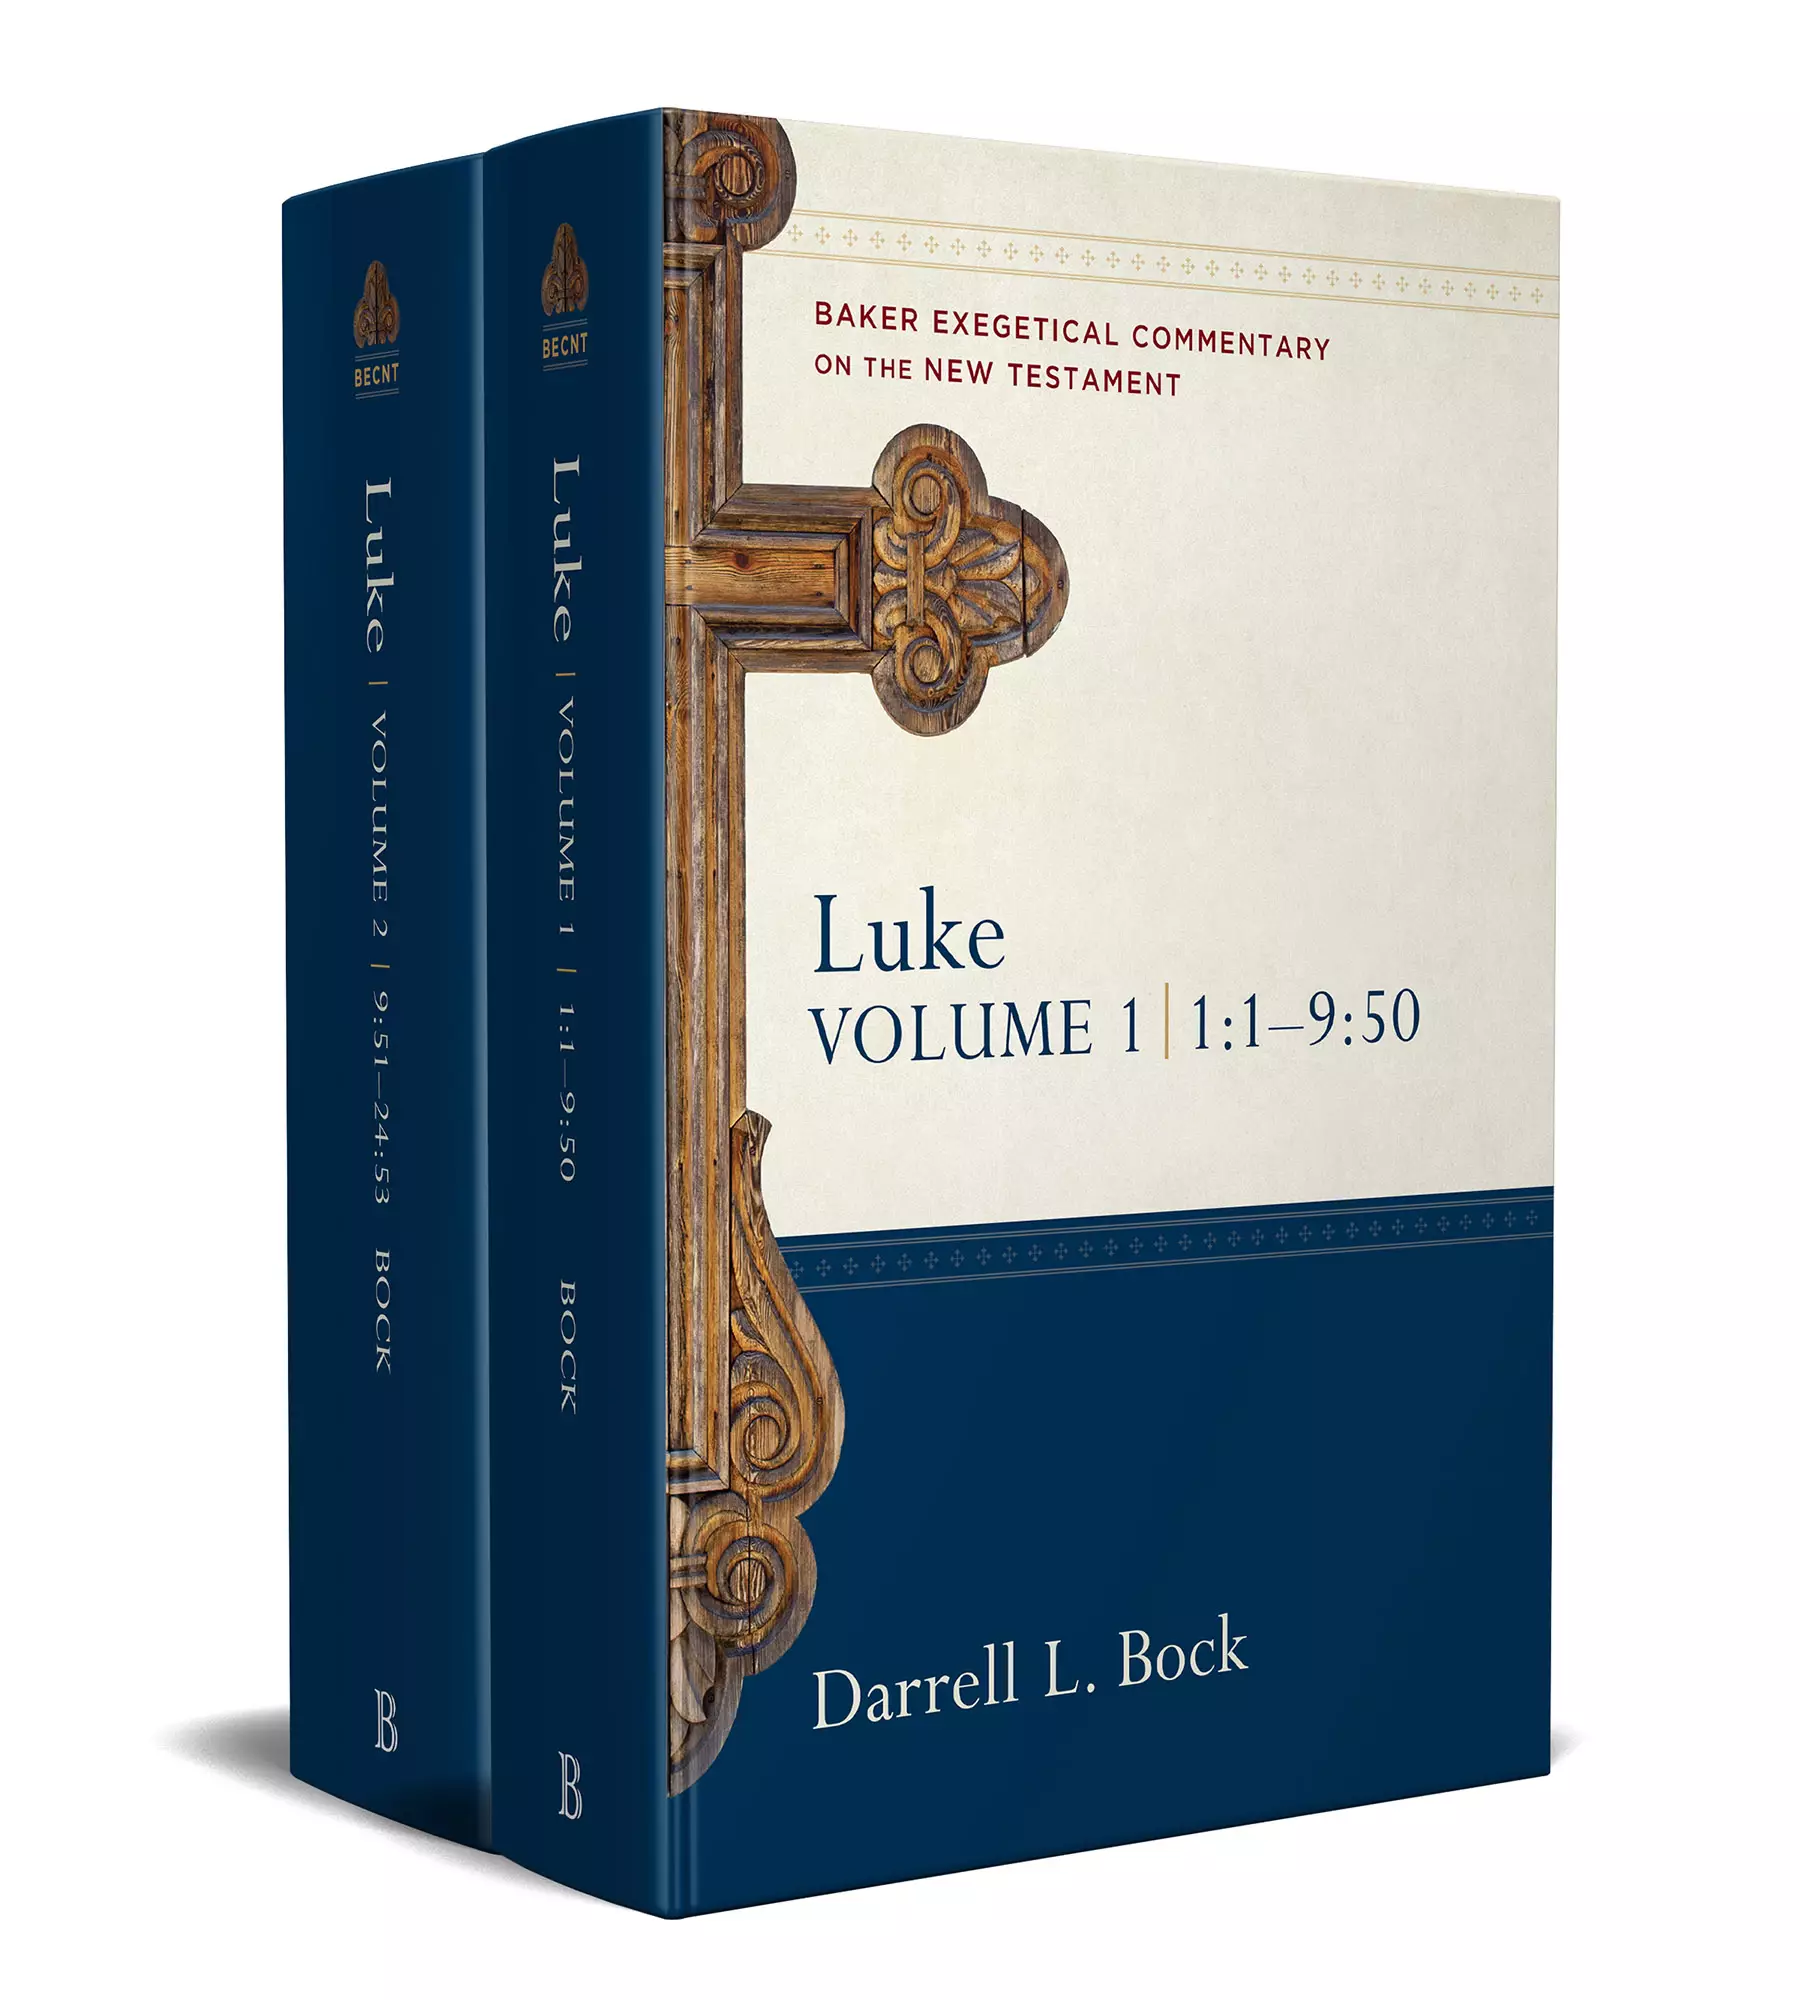 Luke, 2 Volumes: Baker Exegetical Commentary on the New Testament